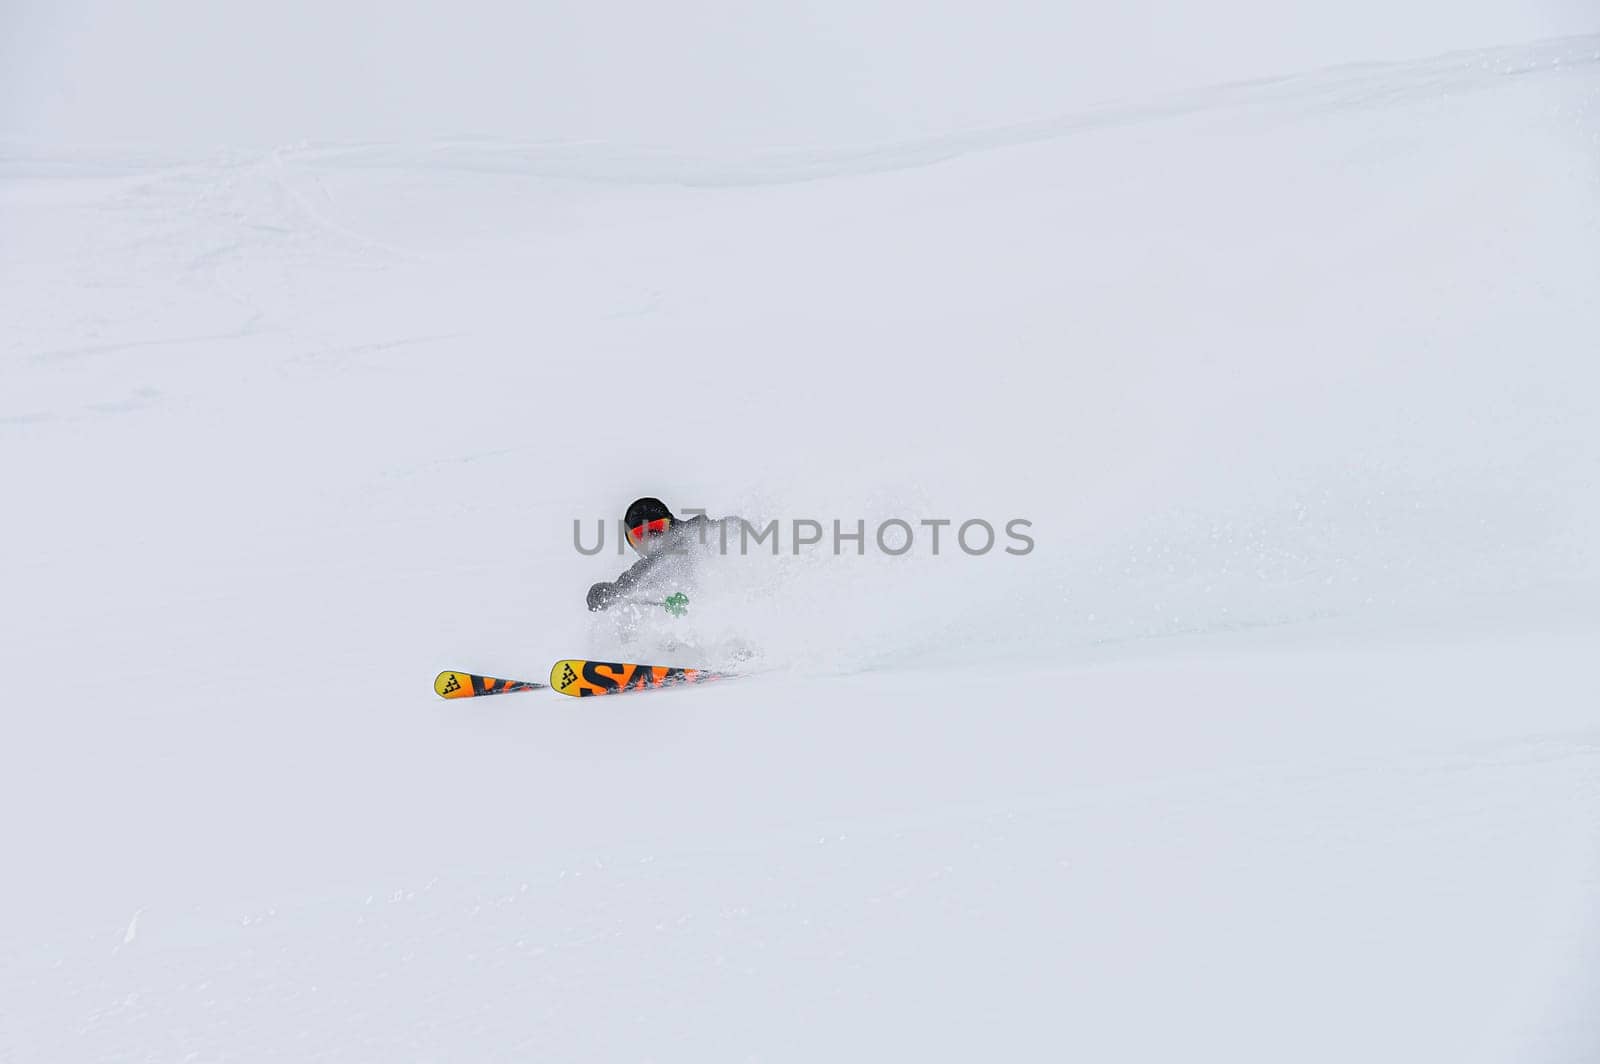 Male skier turns in loose snow, skier downhill downhill at ski resort.